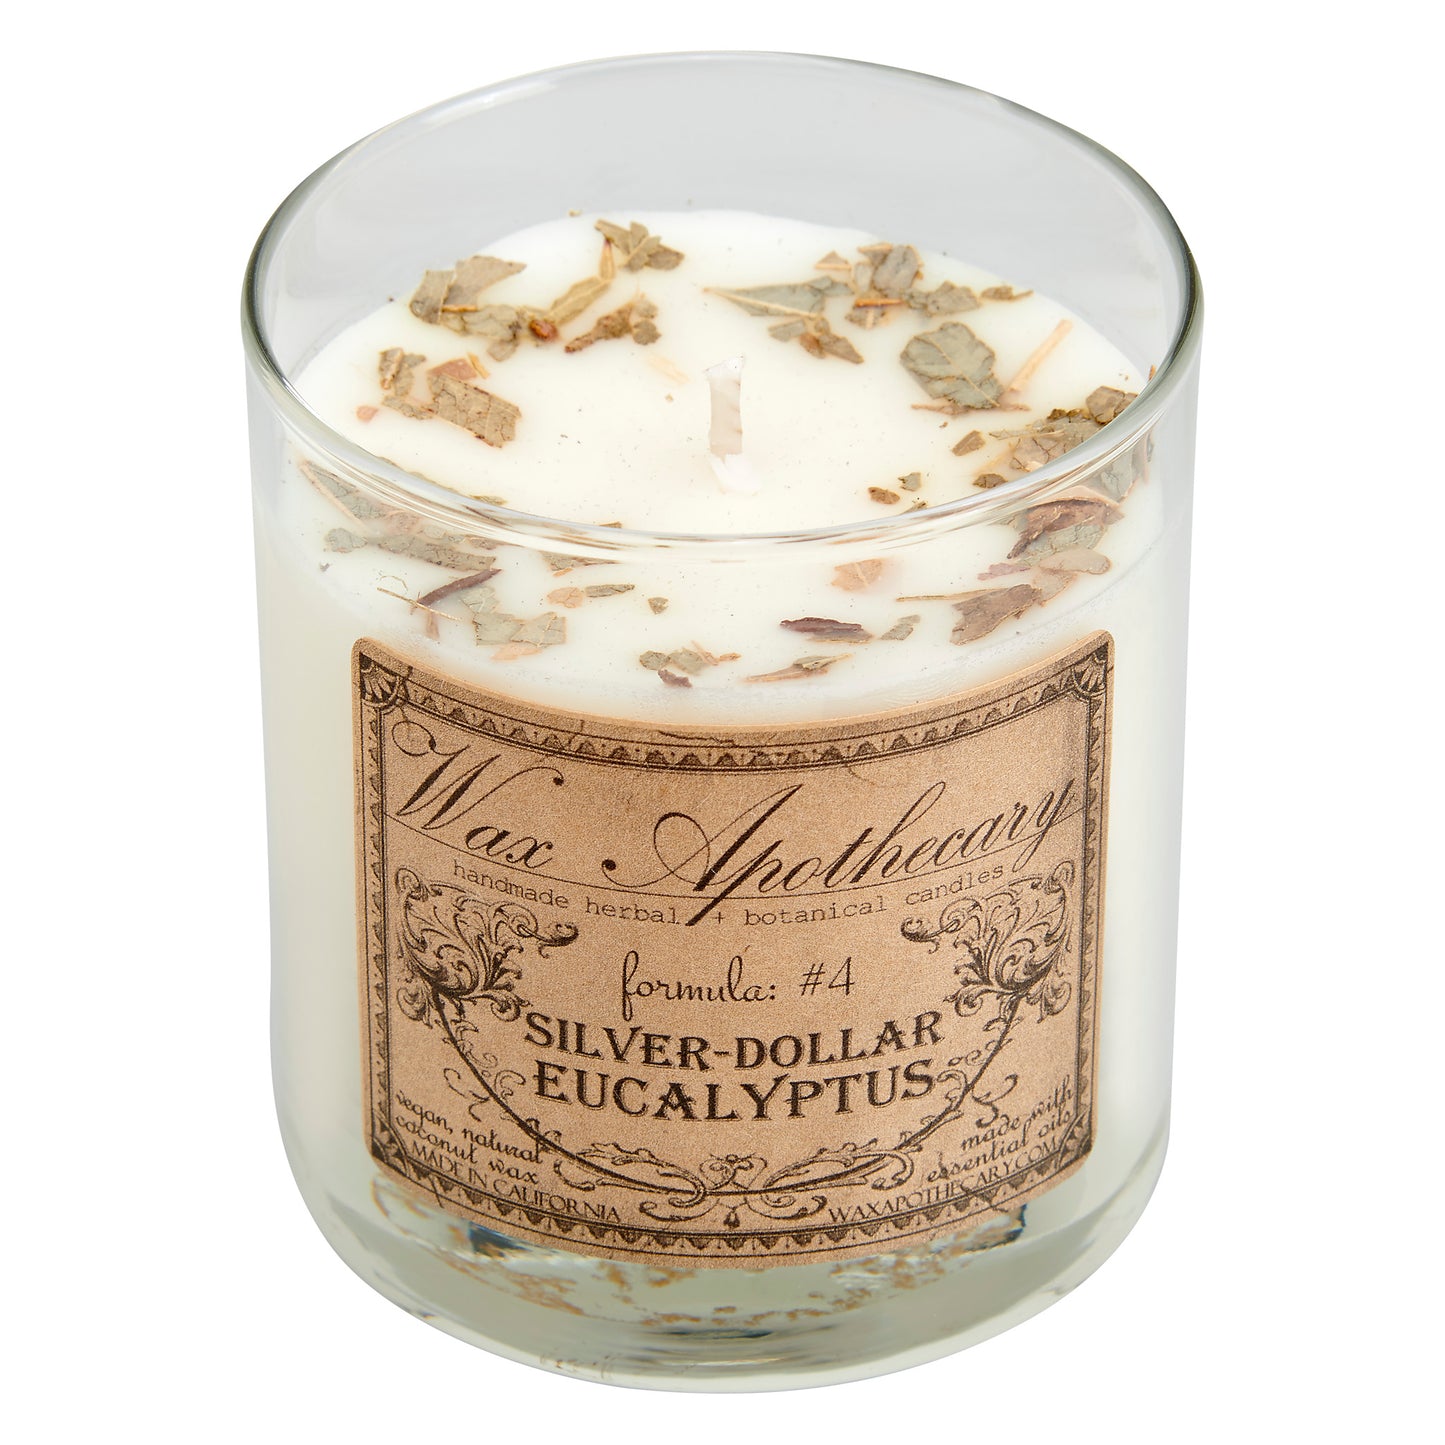 Silver-Dollar Eucalyptus 7 oz Botanical Candle in Scotch Glass